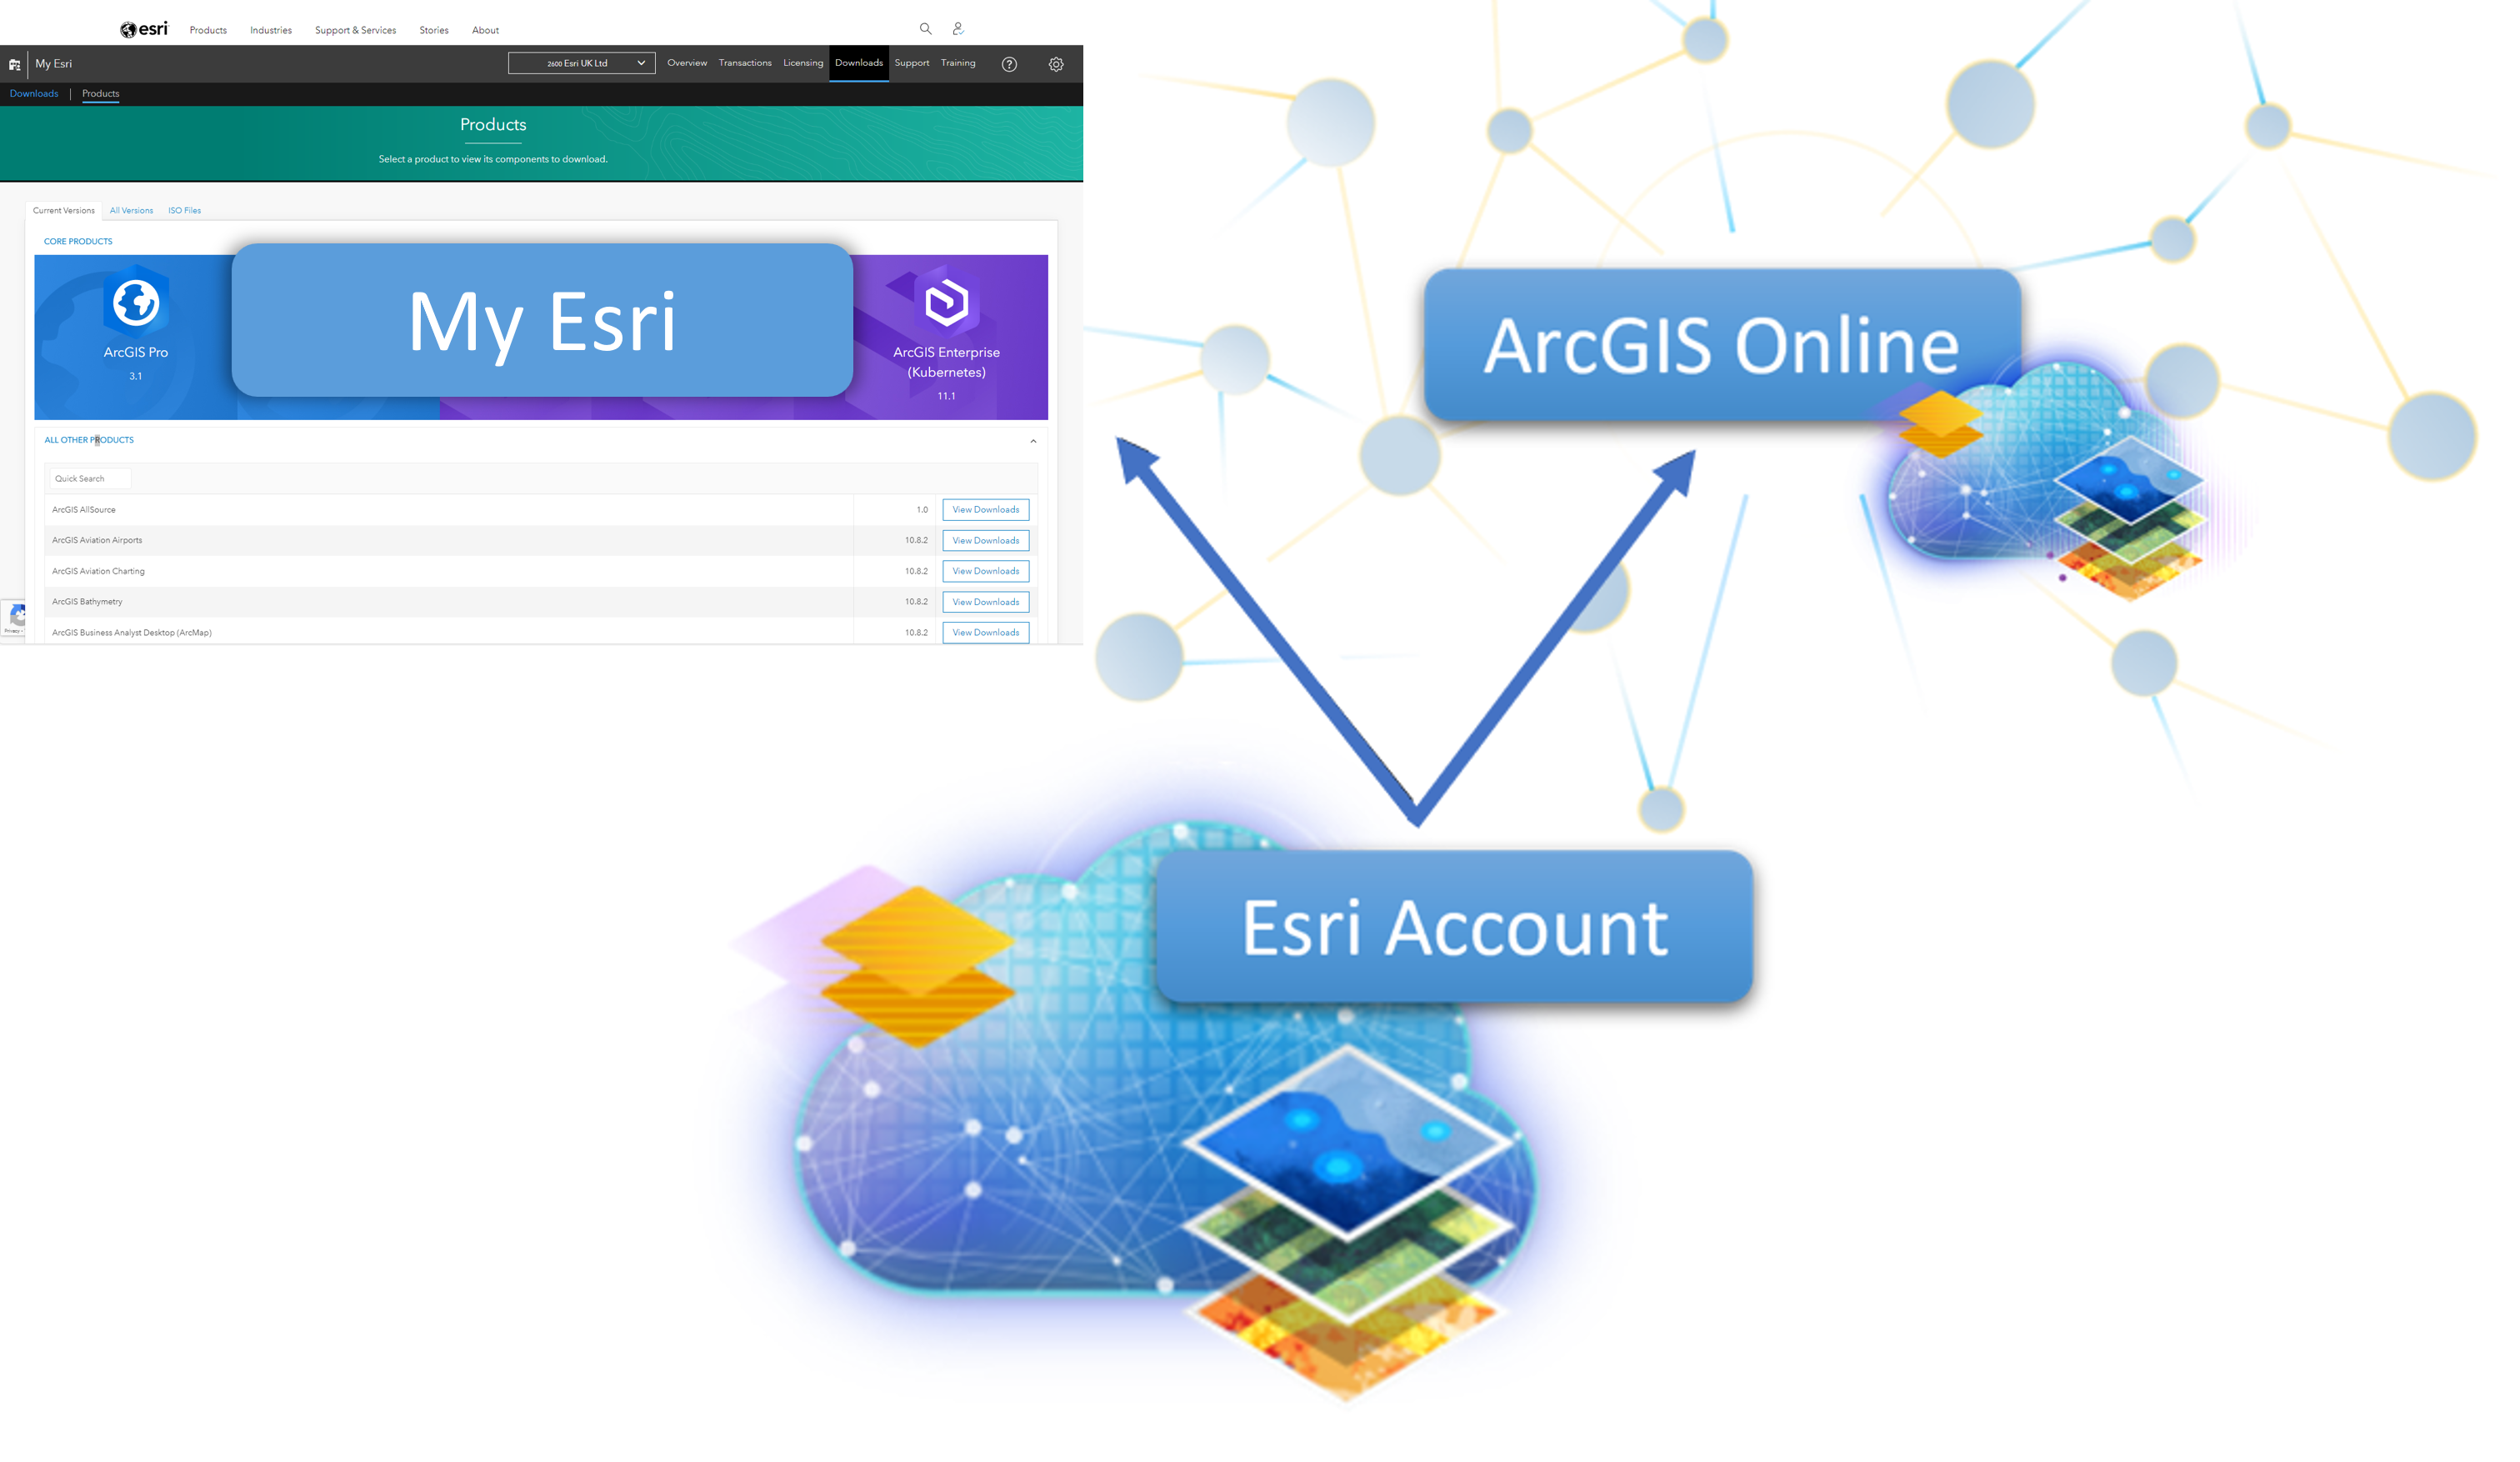 my esri tree diagram from esri account to My Esri and ArcGIS Online